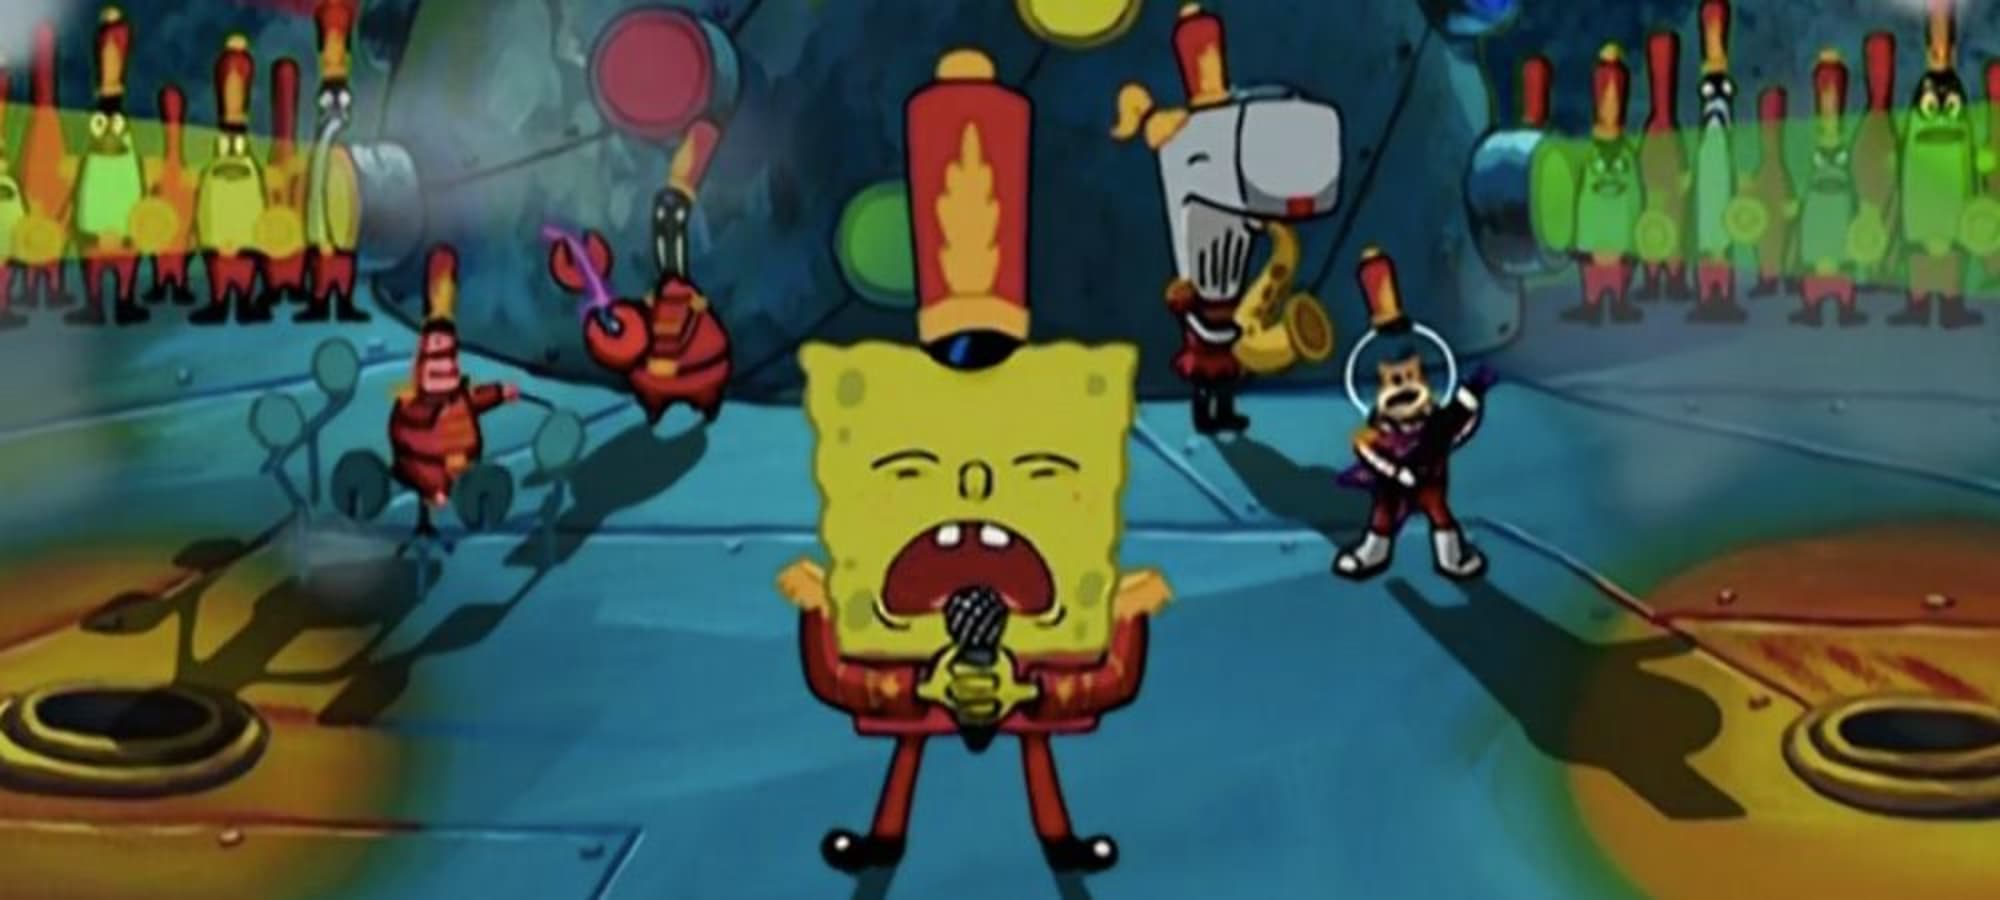 Band Geeks Is The Defining Episode Of Spongebob Squarepants